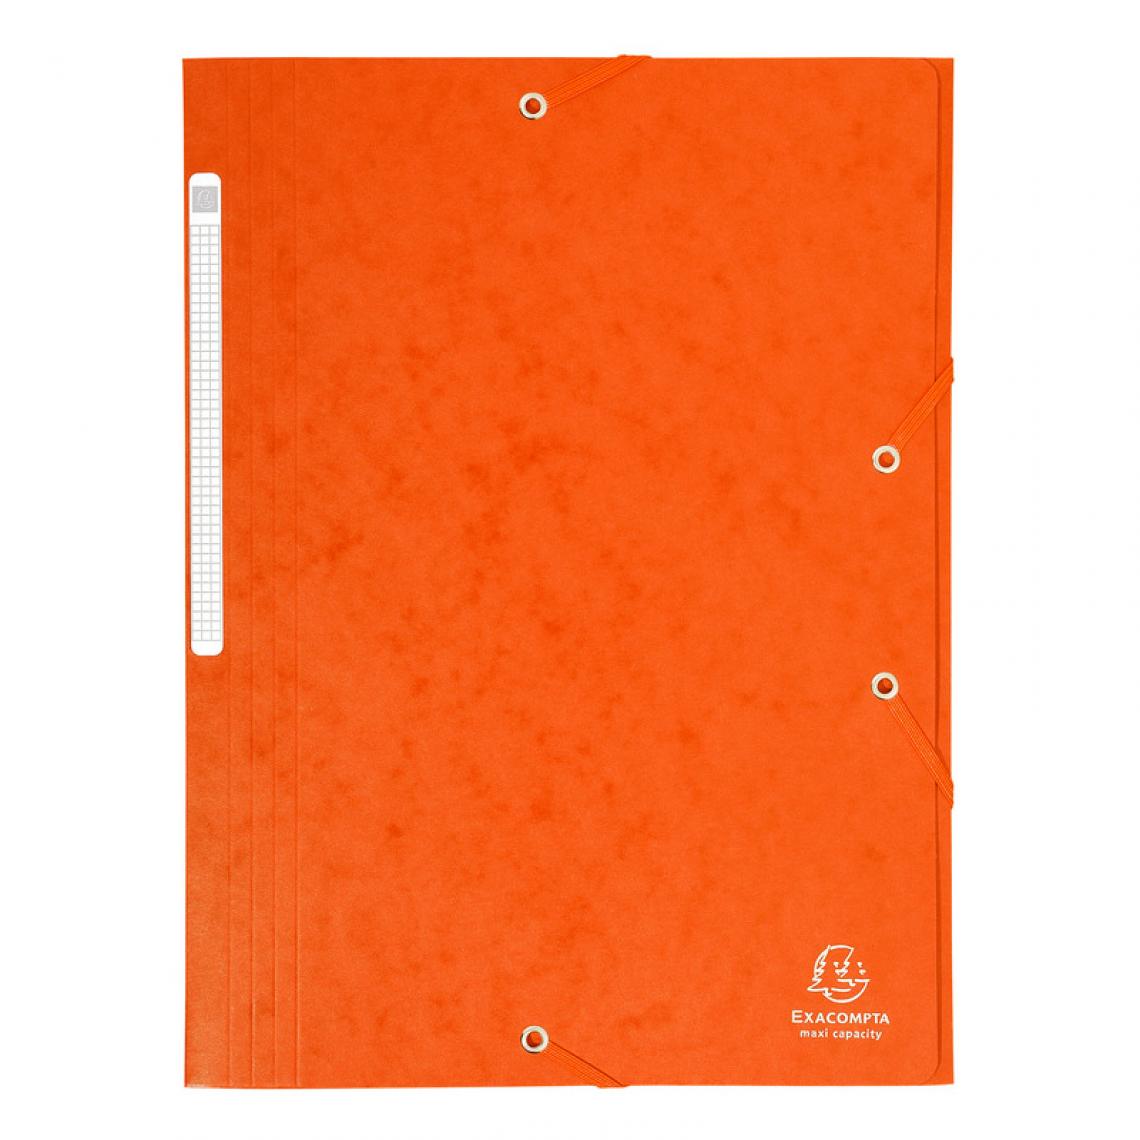 Exacompta - EXACOMPTA Chemise à élastiques Maxi Capacity, A4, orange () - Accessoires Bureau